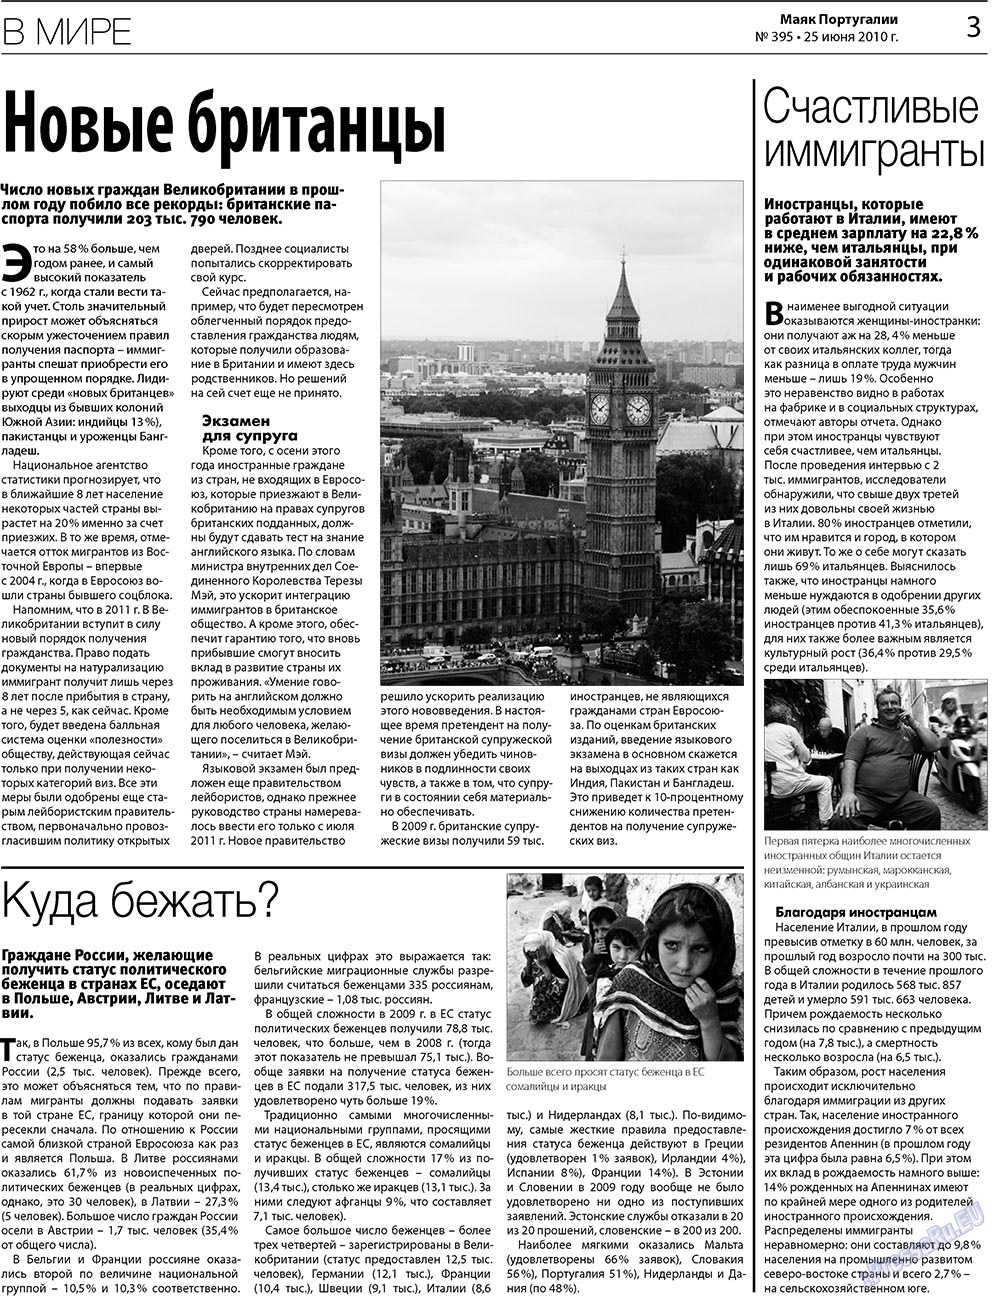 Маяк Португалии, газета. 2010 №395 стр.3